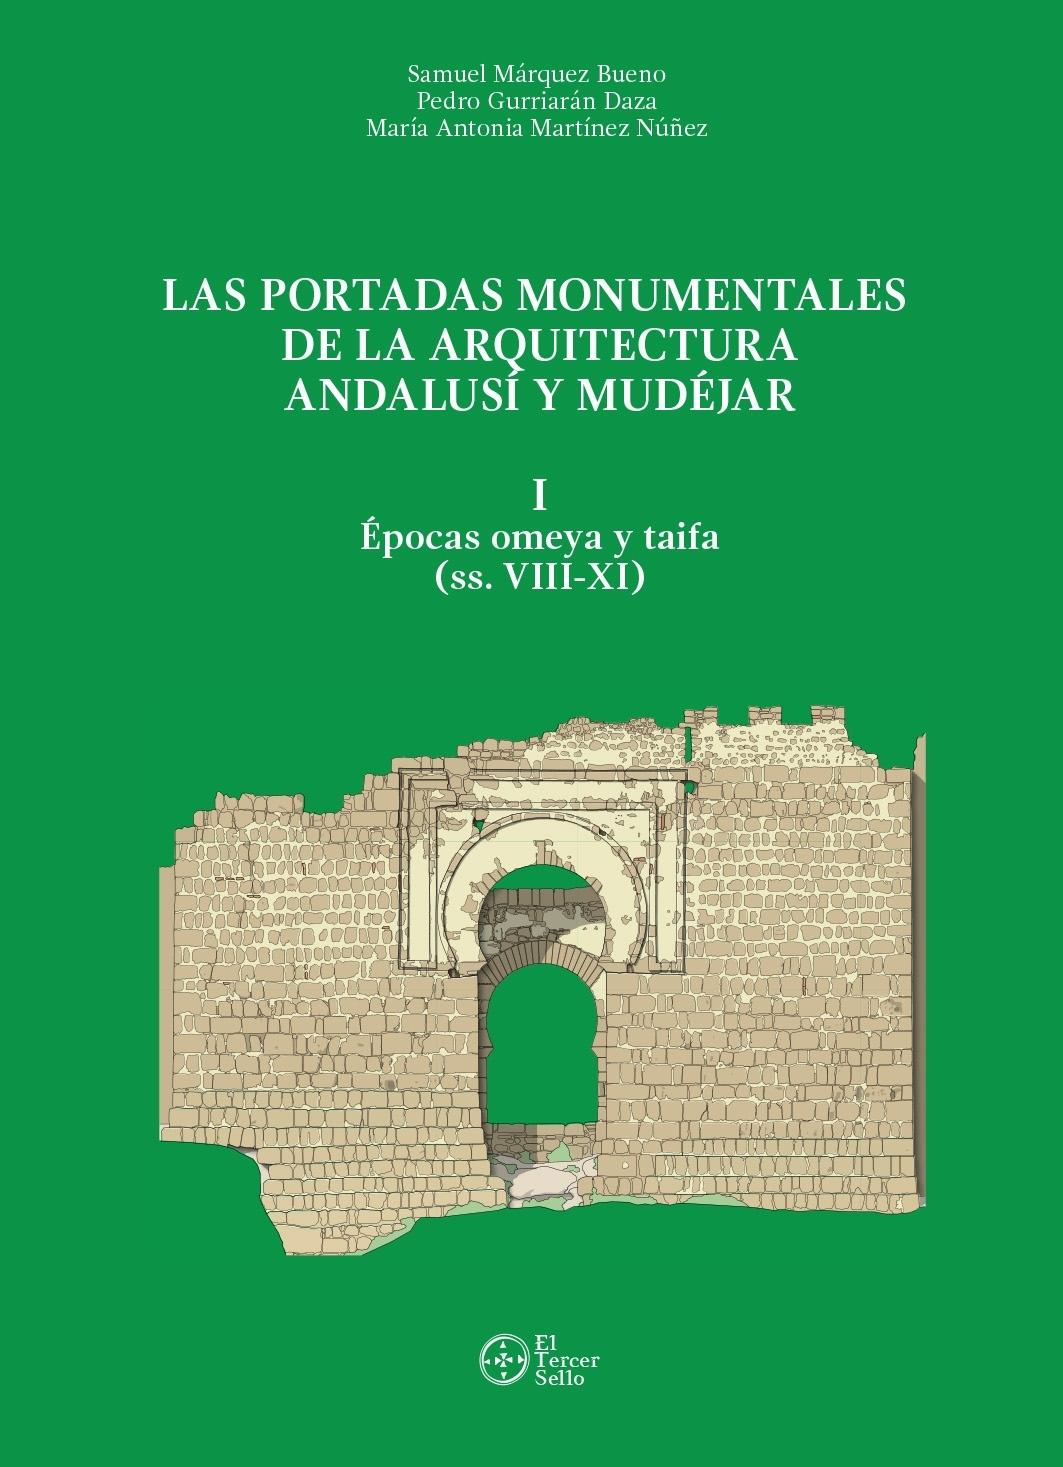 PORTADAS MONUMENTALES DE LA ARQUITECTURA ANDALUSÍ Y MUDÉJAR, I "ÉPOCAS OMEYA Y TAIFA (SS. VIII-XI)"